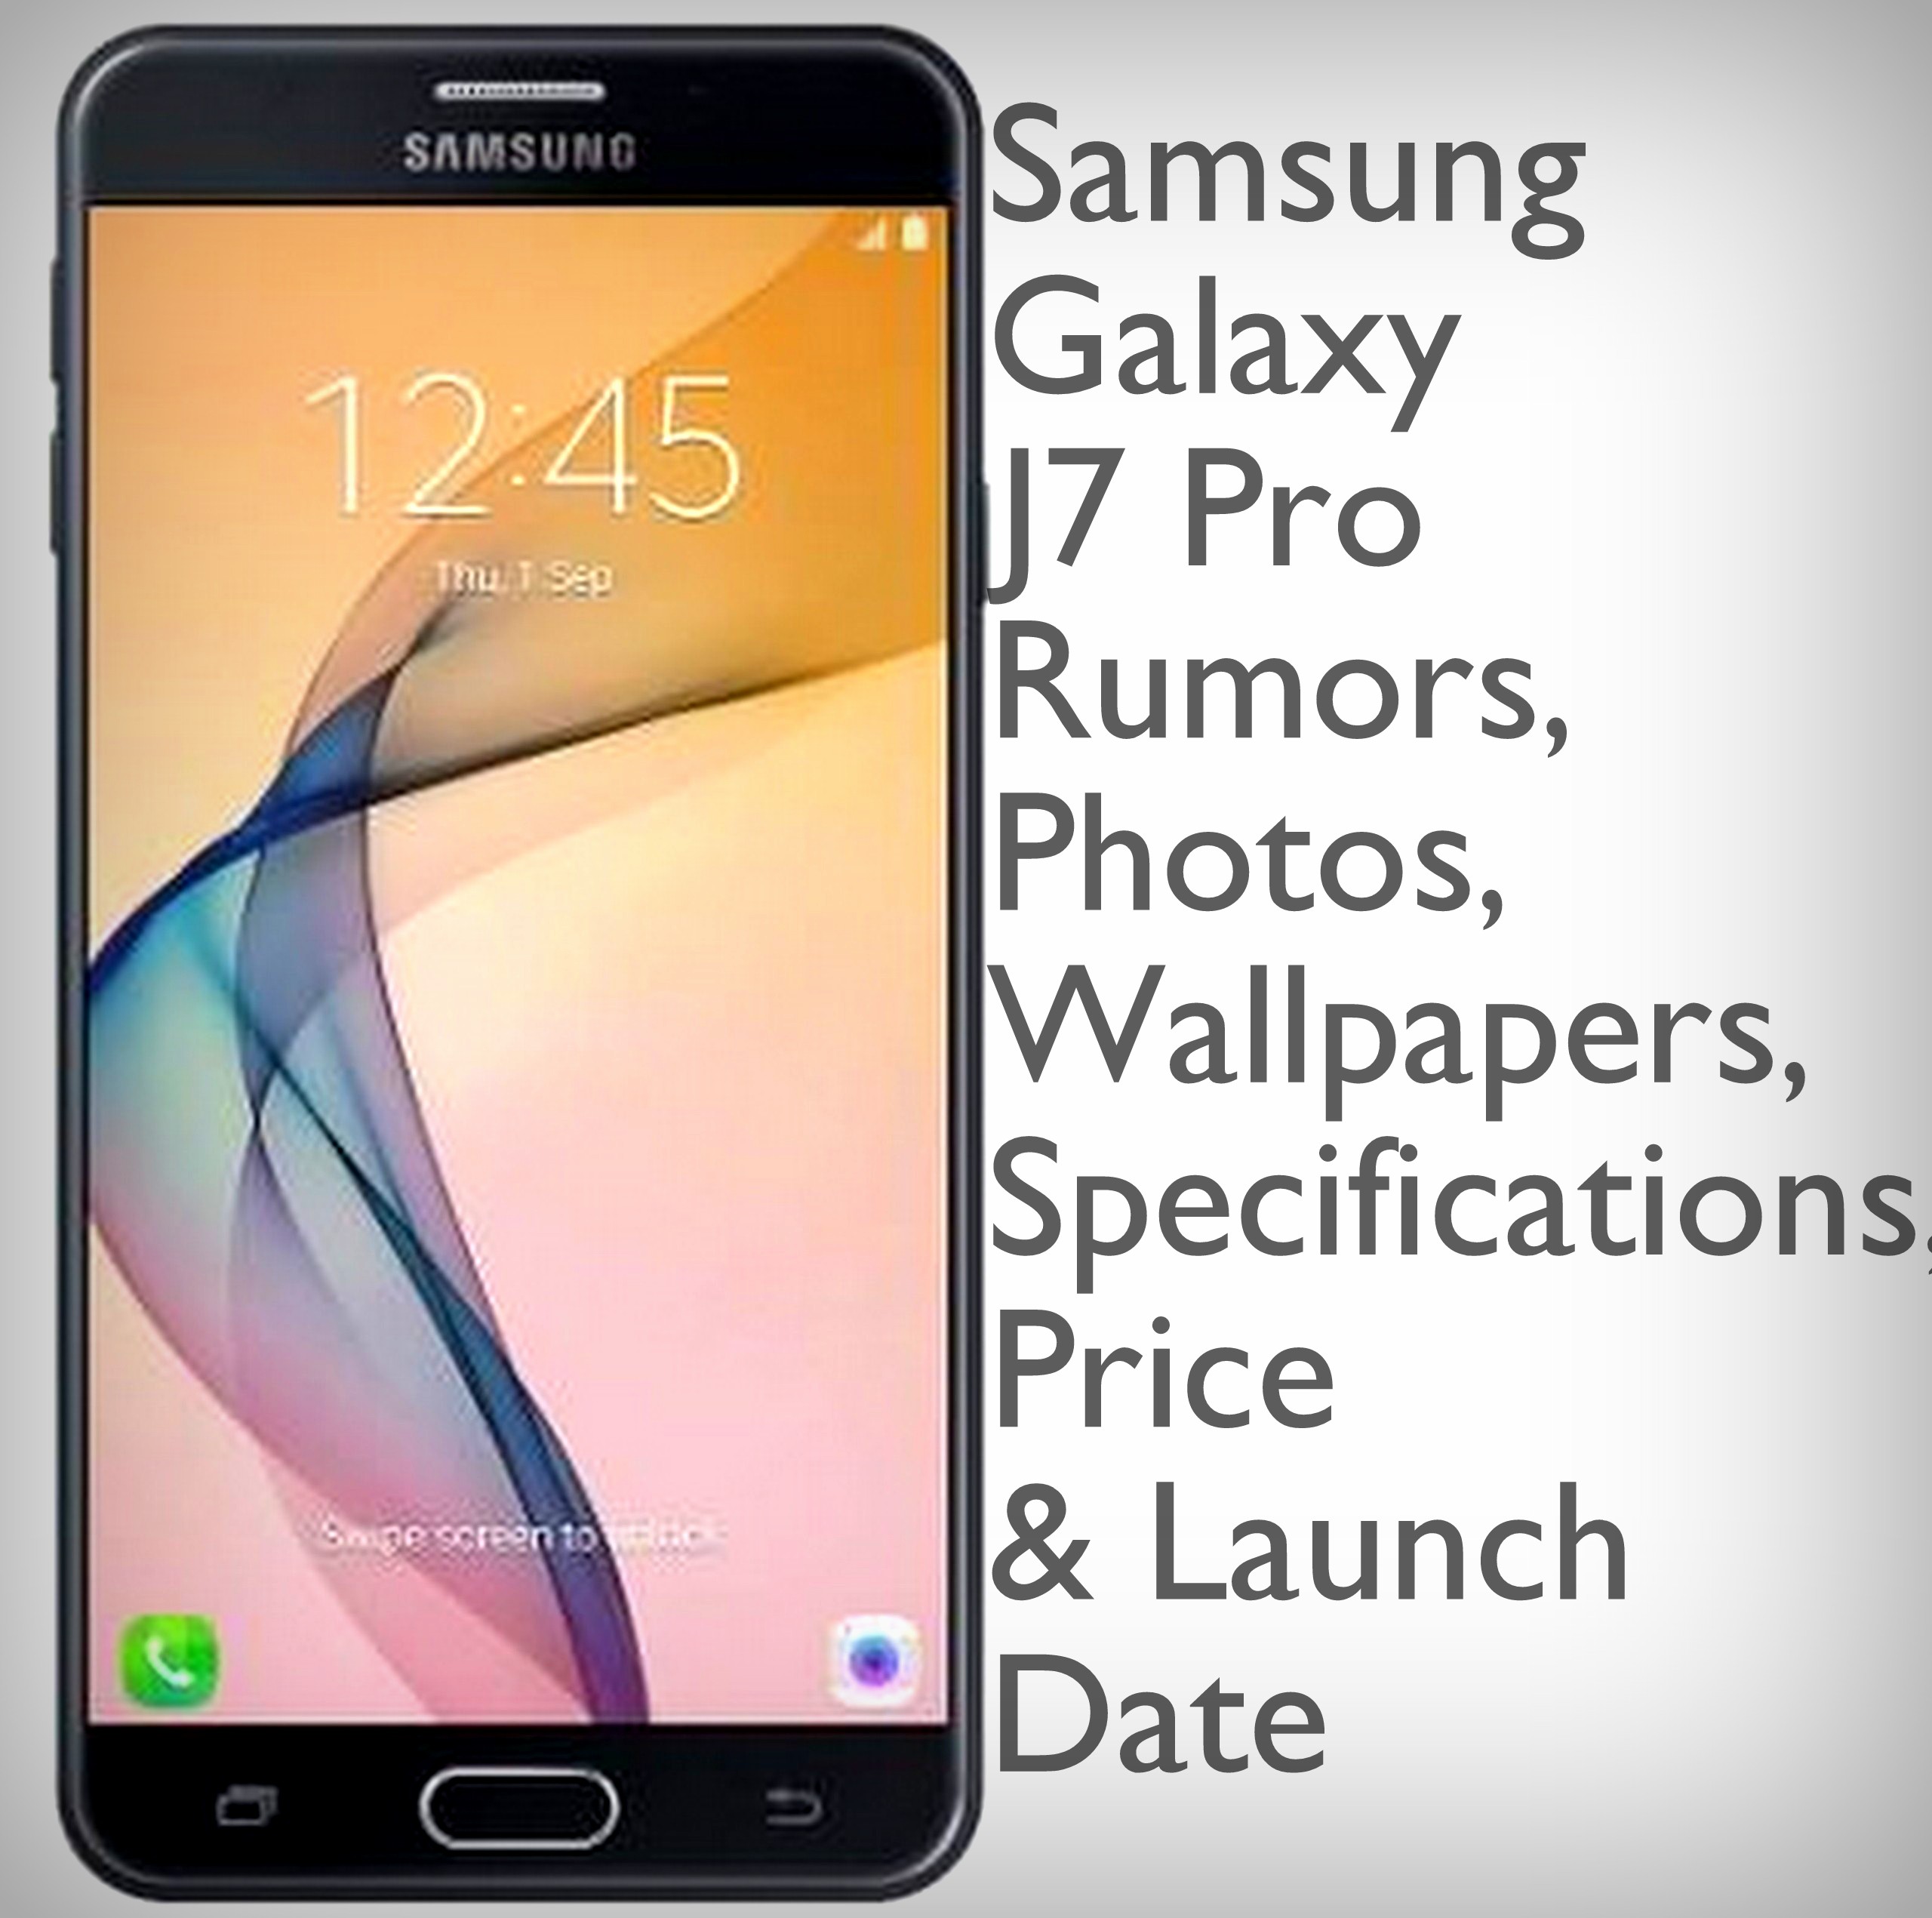 Samsung Galaxy J7 Pro Rumors Photos Wallpapers